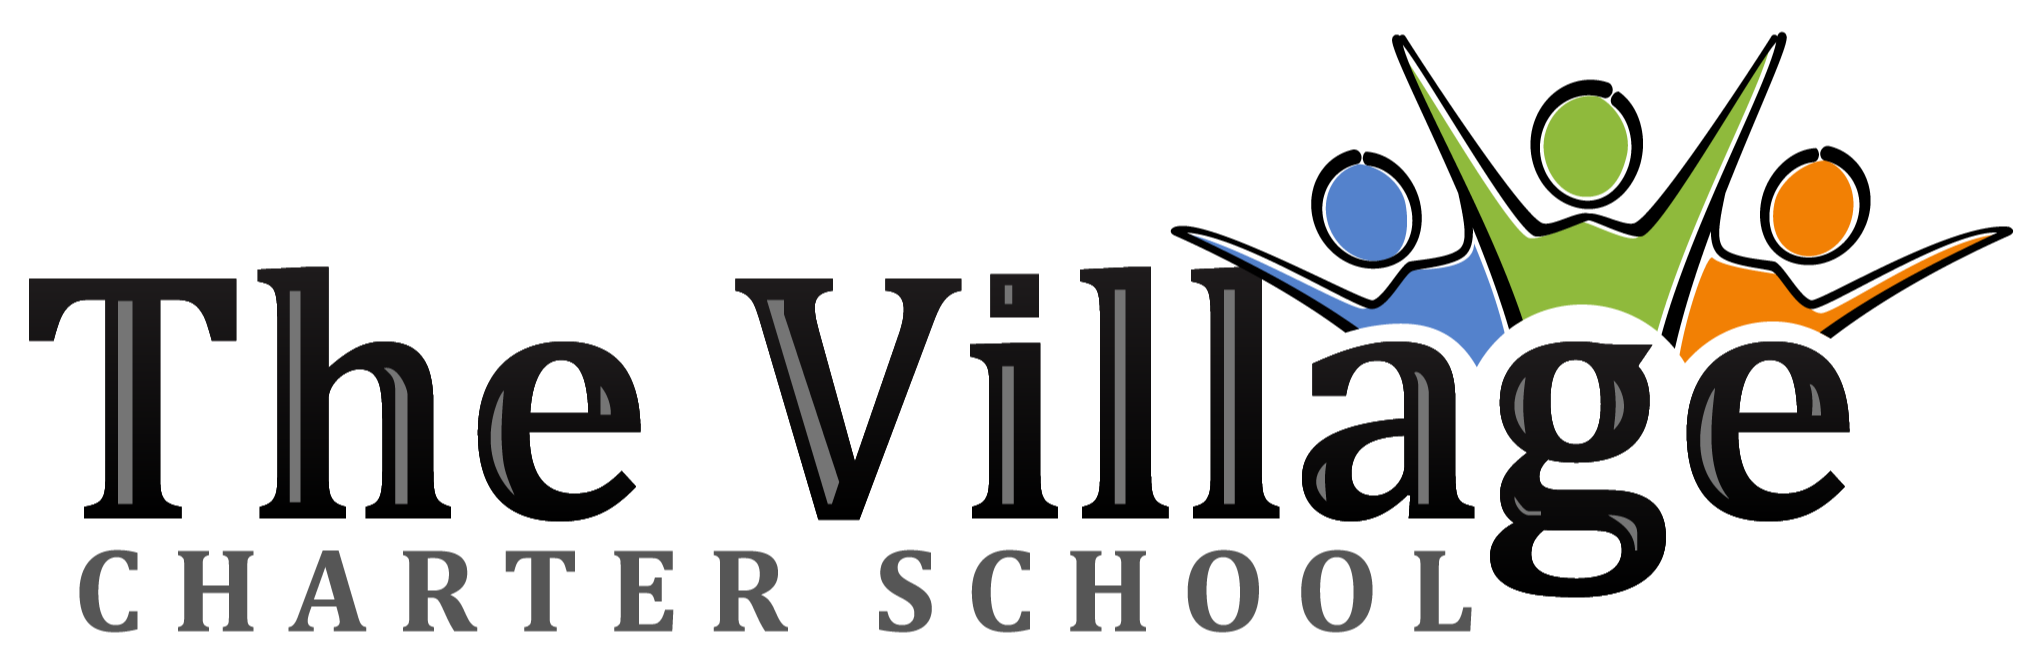 The Village Charter School Horizontal Logo